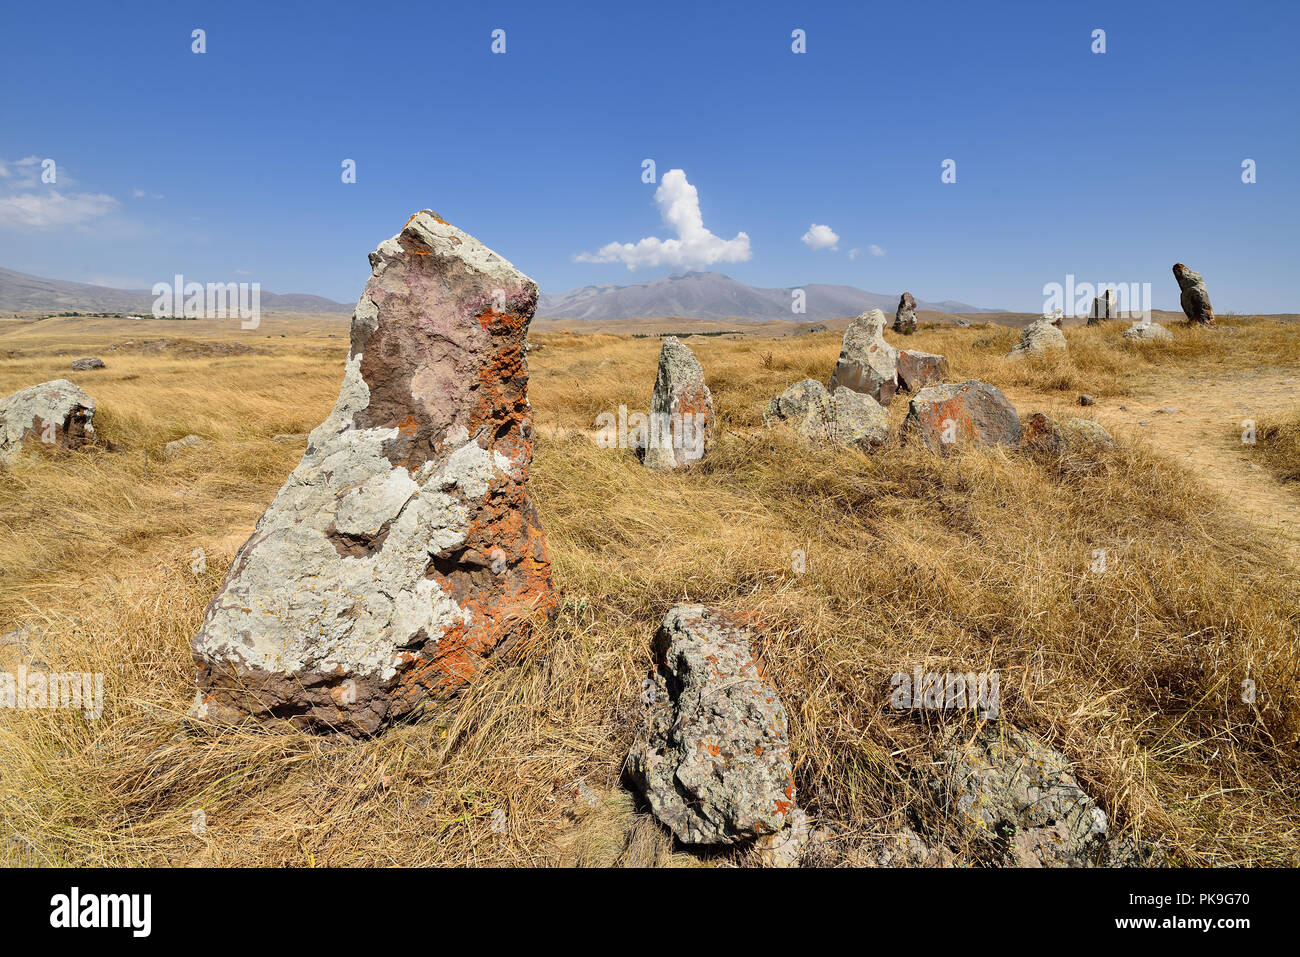 Armenia, el antiguo observatorio llamado Karahunj Zorats Karer o cerca de la ciudad de Sisian, Stonehenge armenio. Sitio arqueológico prehistórico megalítico Foto de stock